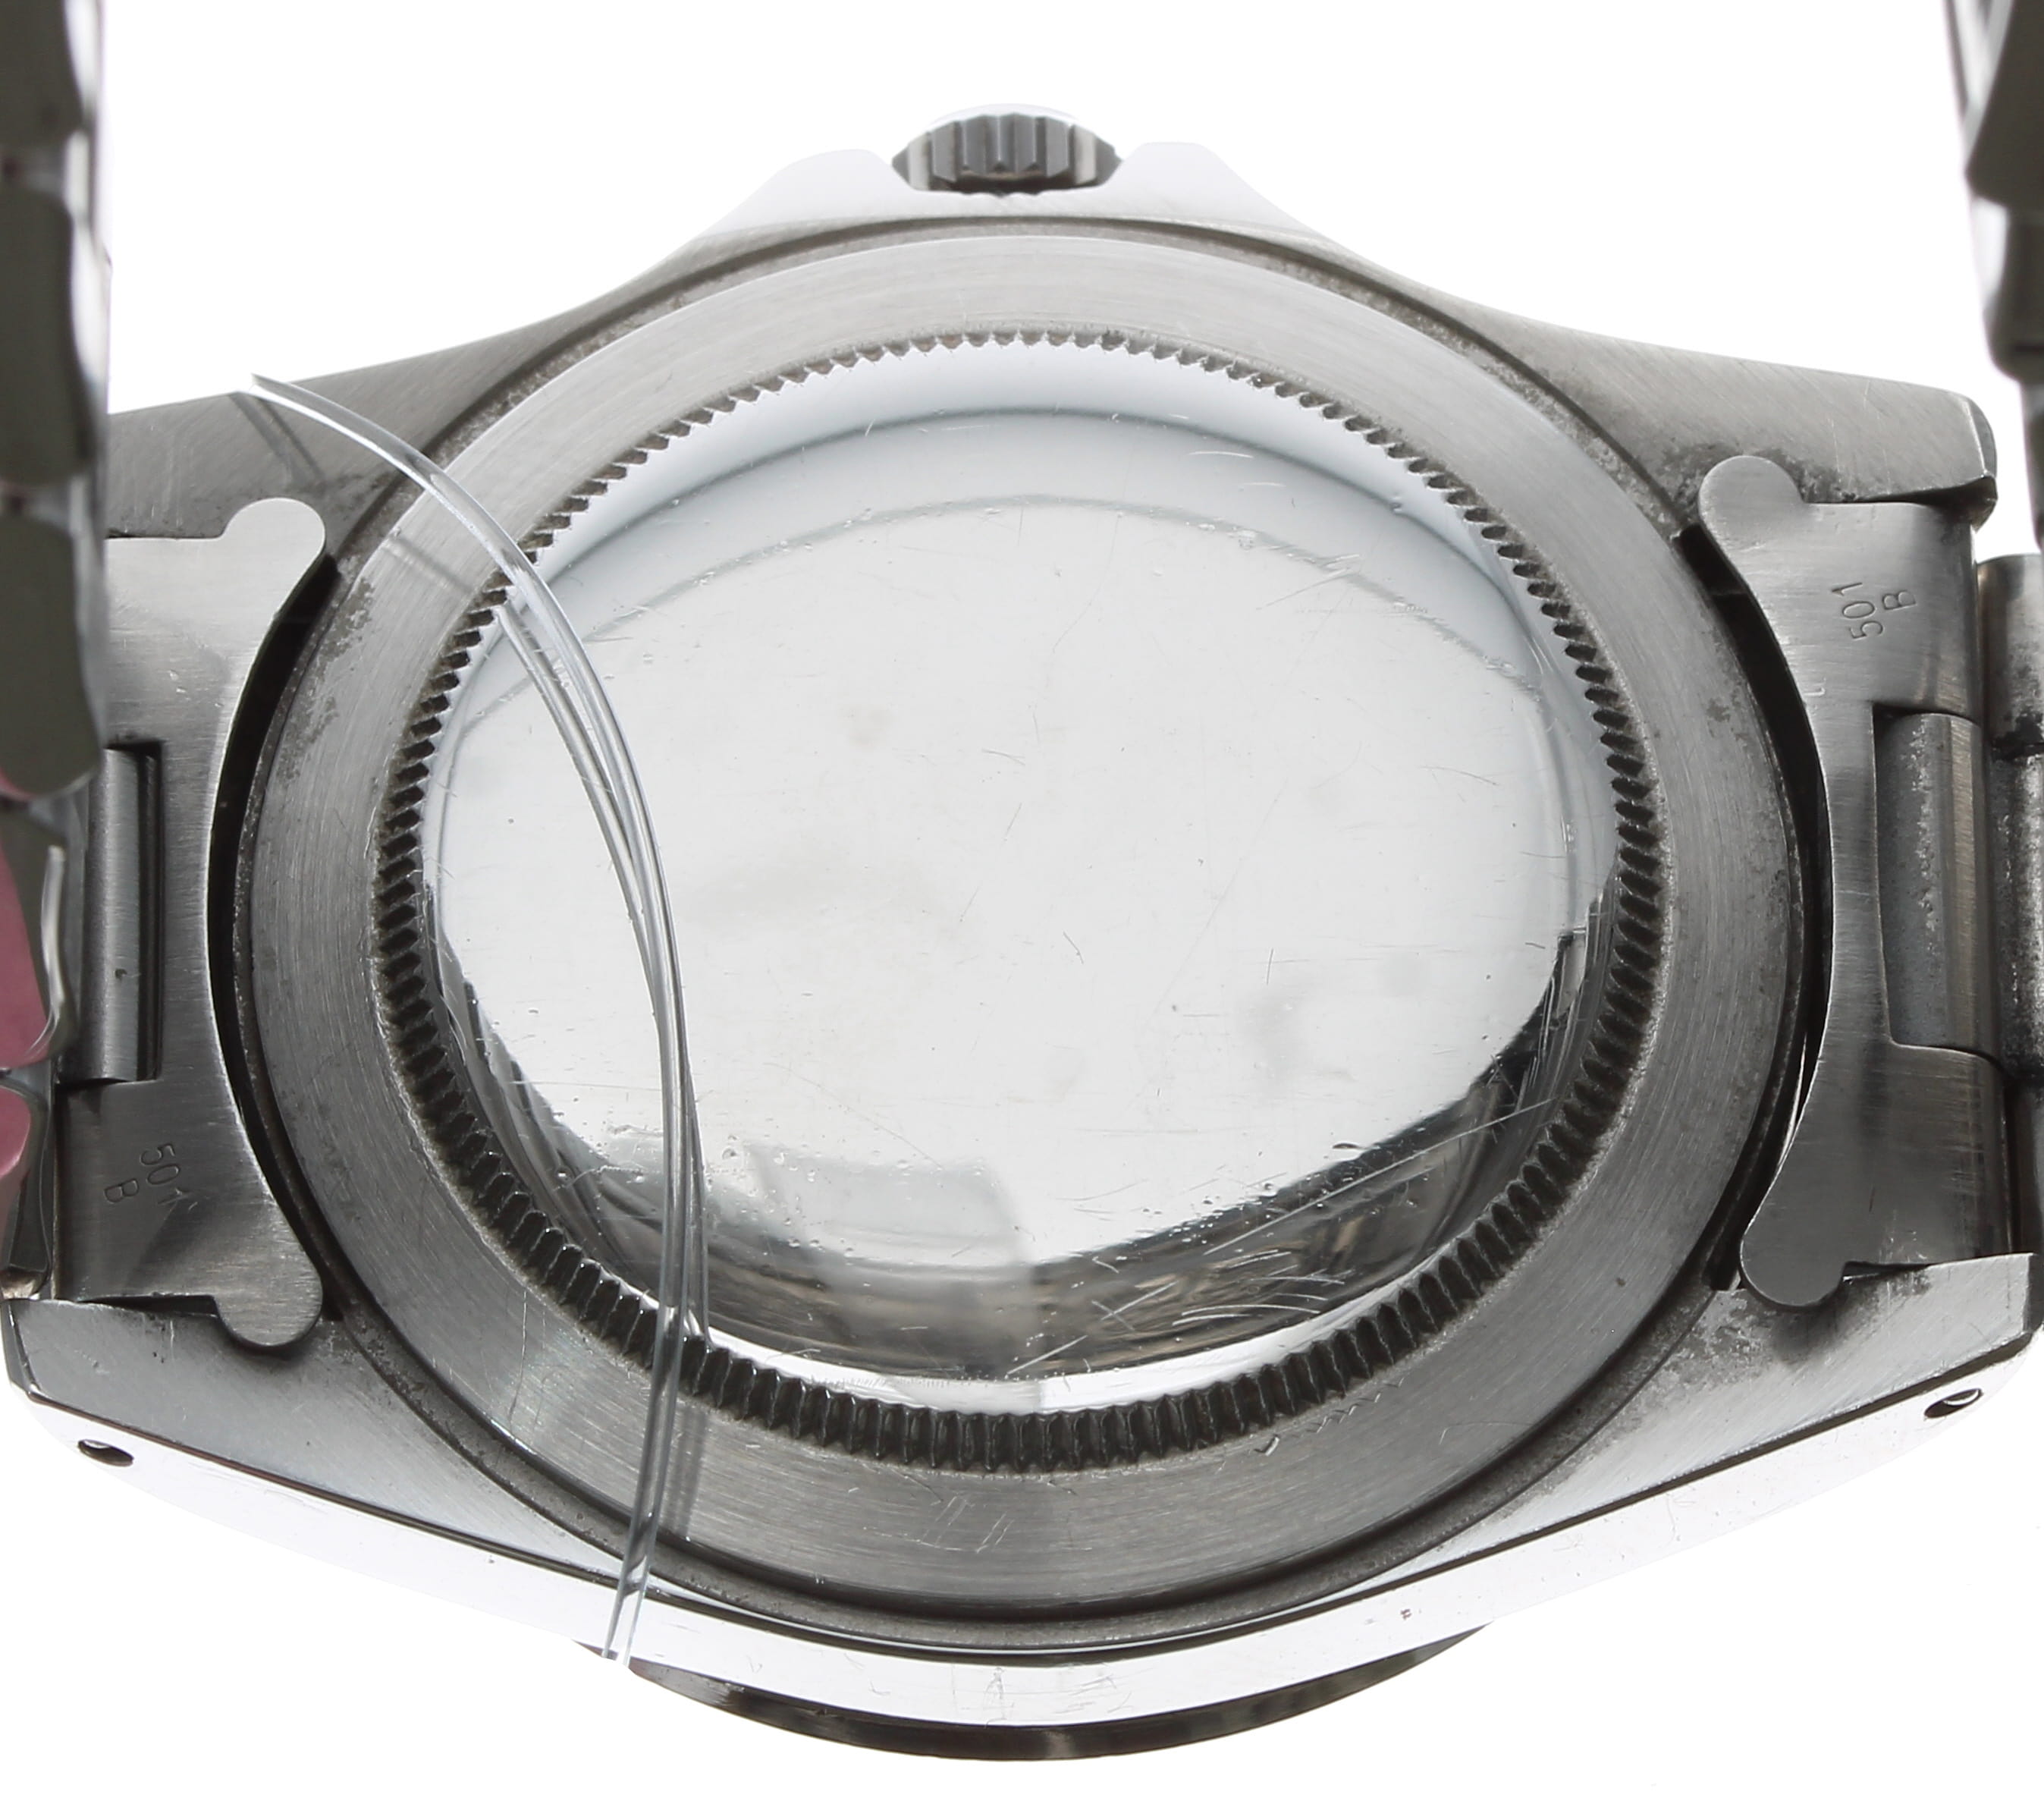 Rolex Oyster Perpetual Date Explorer II 'Steve McQueen' stainless steel gentleman's wristwatch, - Image 2 of 7